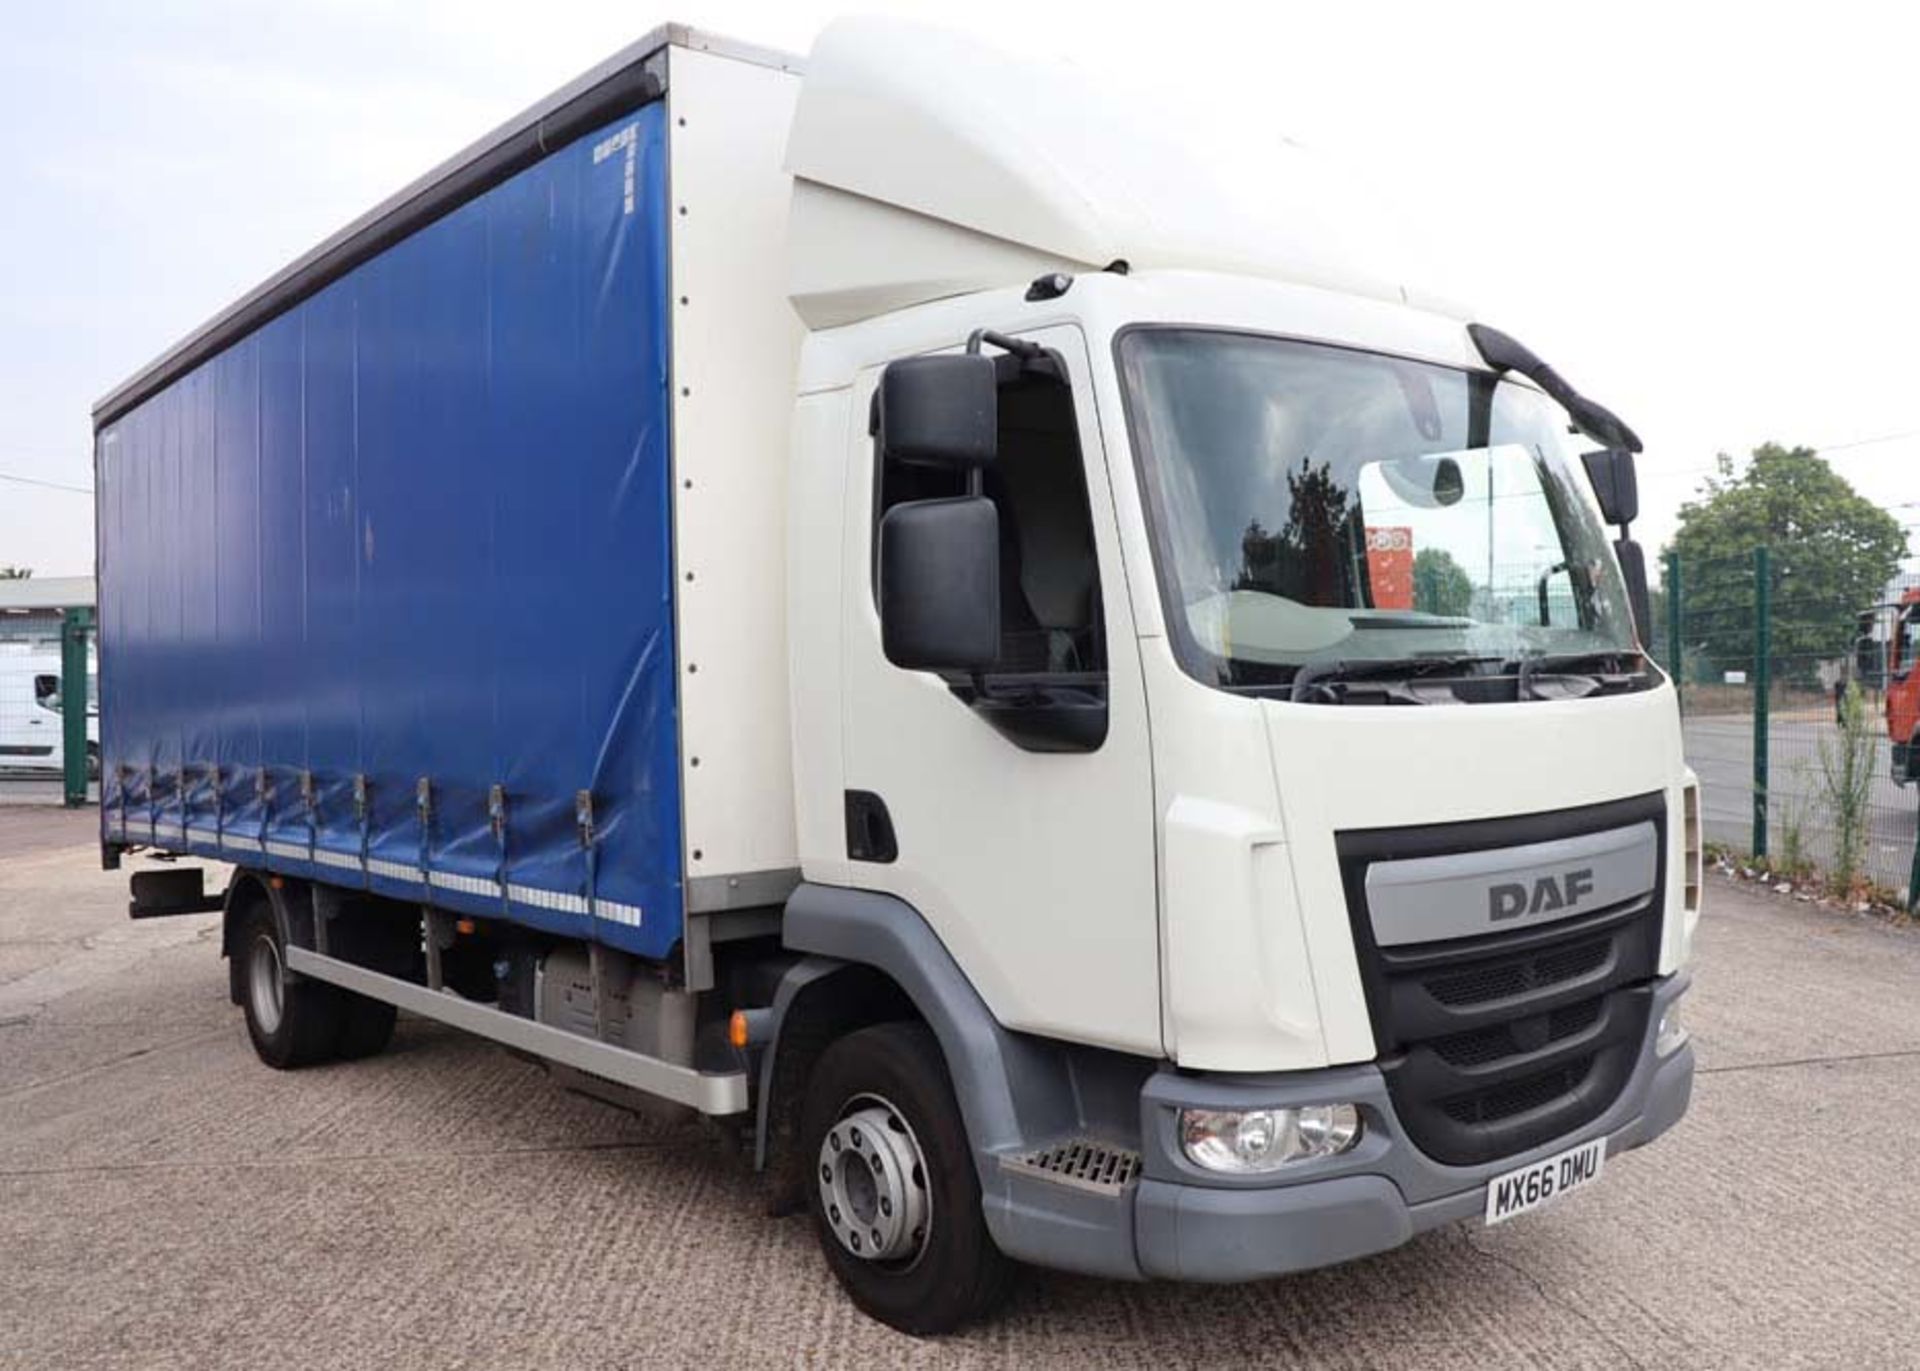 DAF TRUCKS Euro 6 curtain sided lorry, 12000kg gross, 4500cc diesel engine, first registered 28.09.